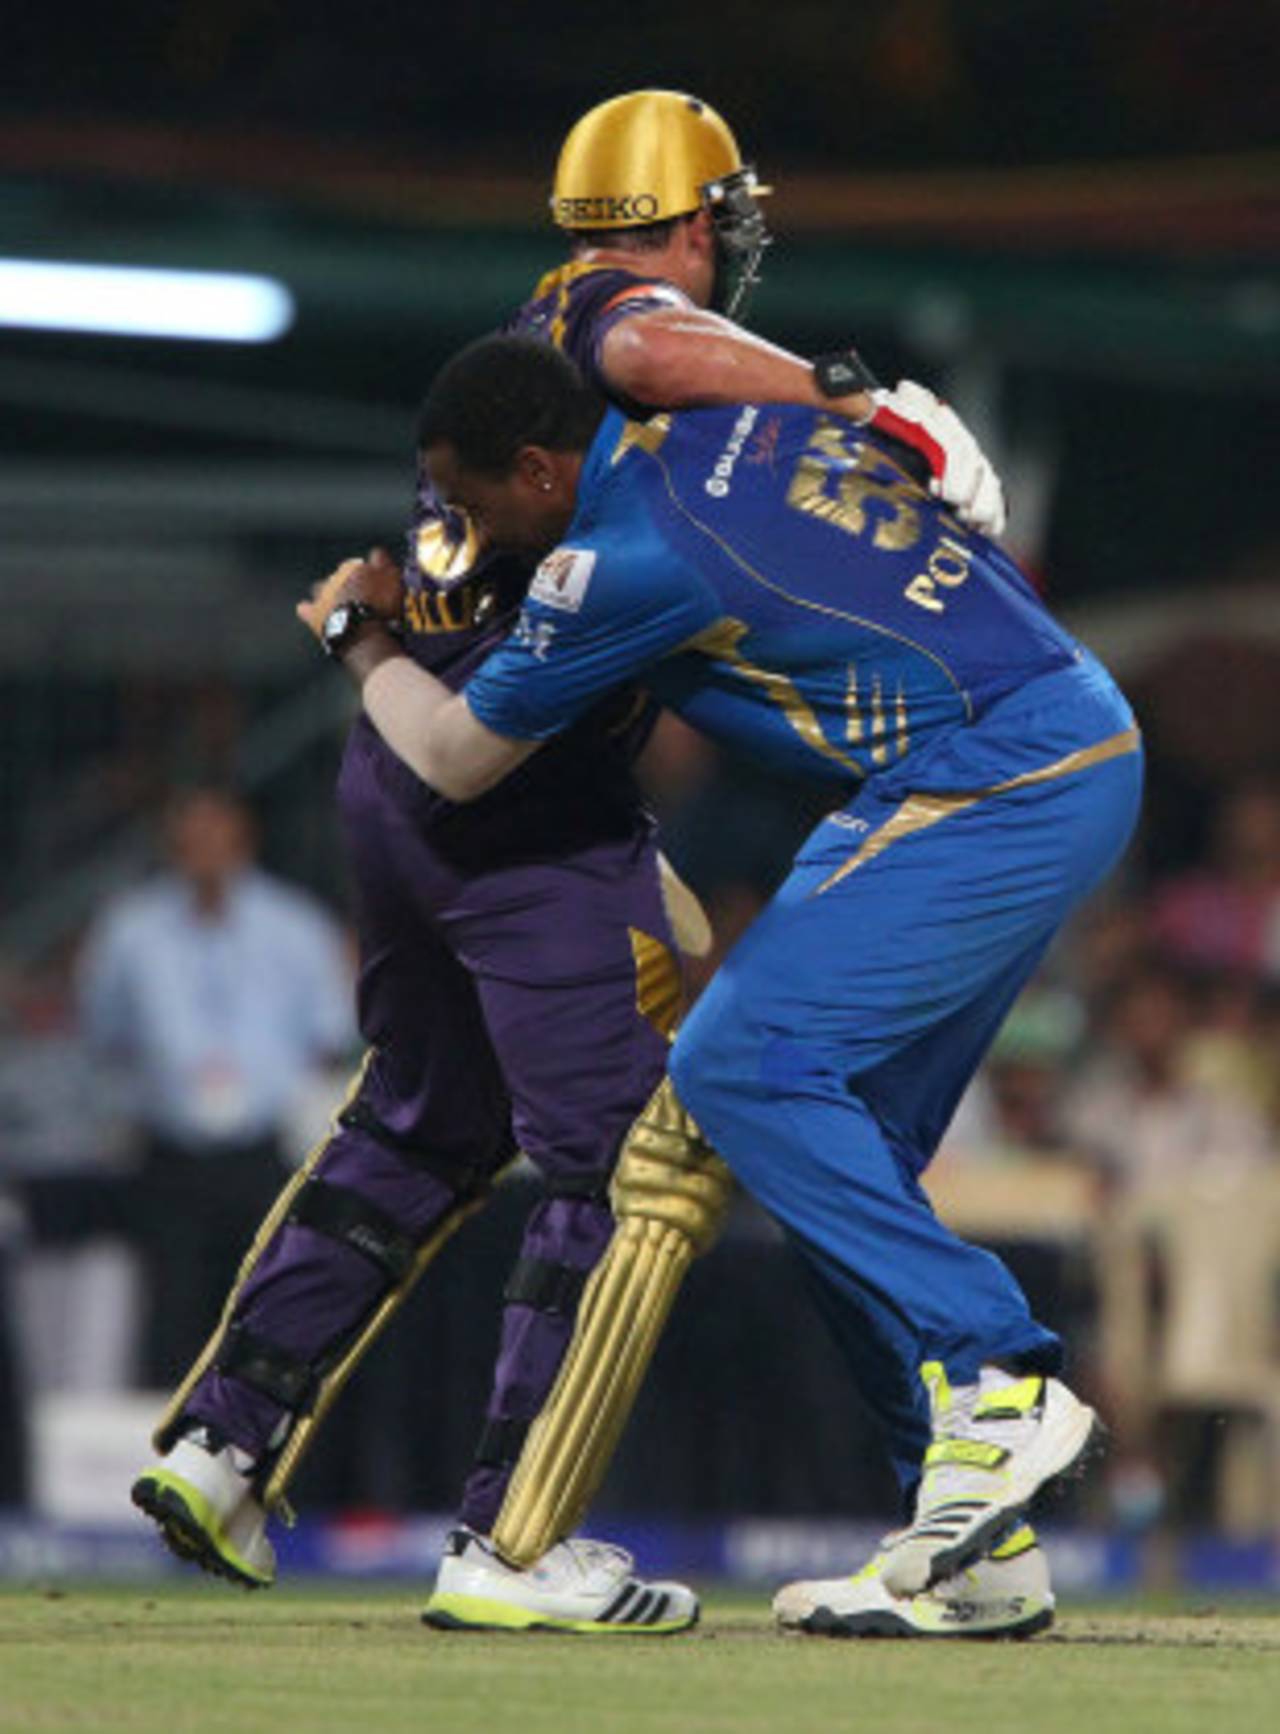 Jacques Kallis and Kieron Pollard collide during an over, Kolkata Knight Riders v Mumbai Indians, IPL 2013, Kolkata, April 24, 2013